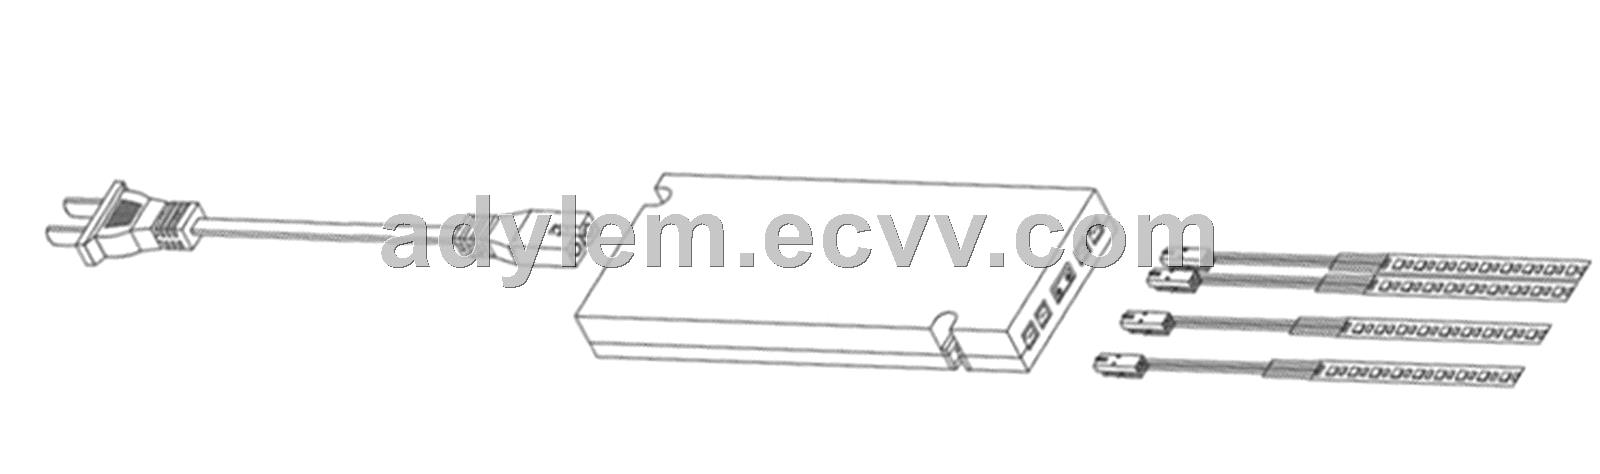 Ultrathin Plastic case constant voltage 12V 60w LED driver for cabinet